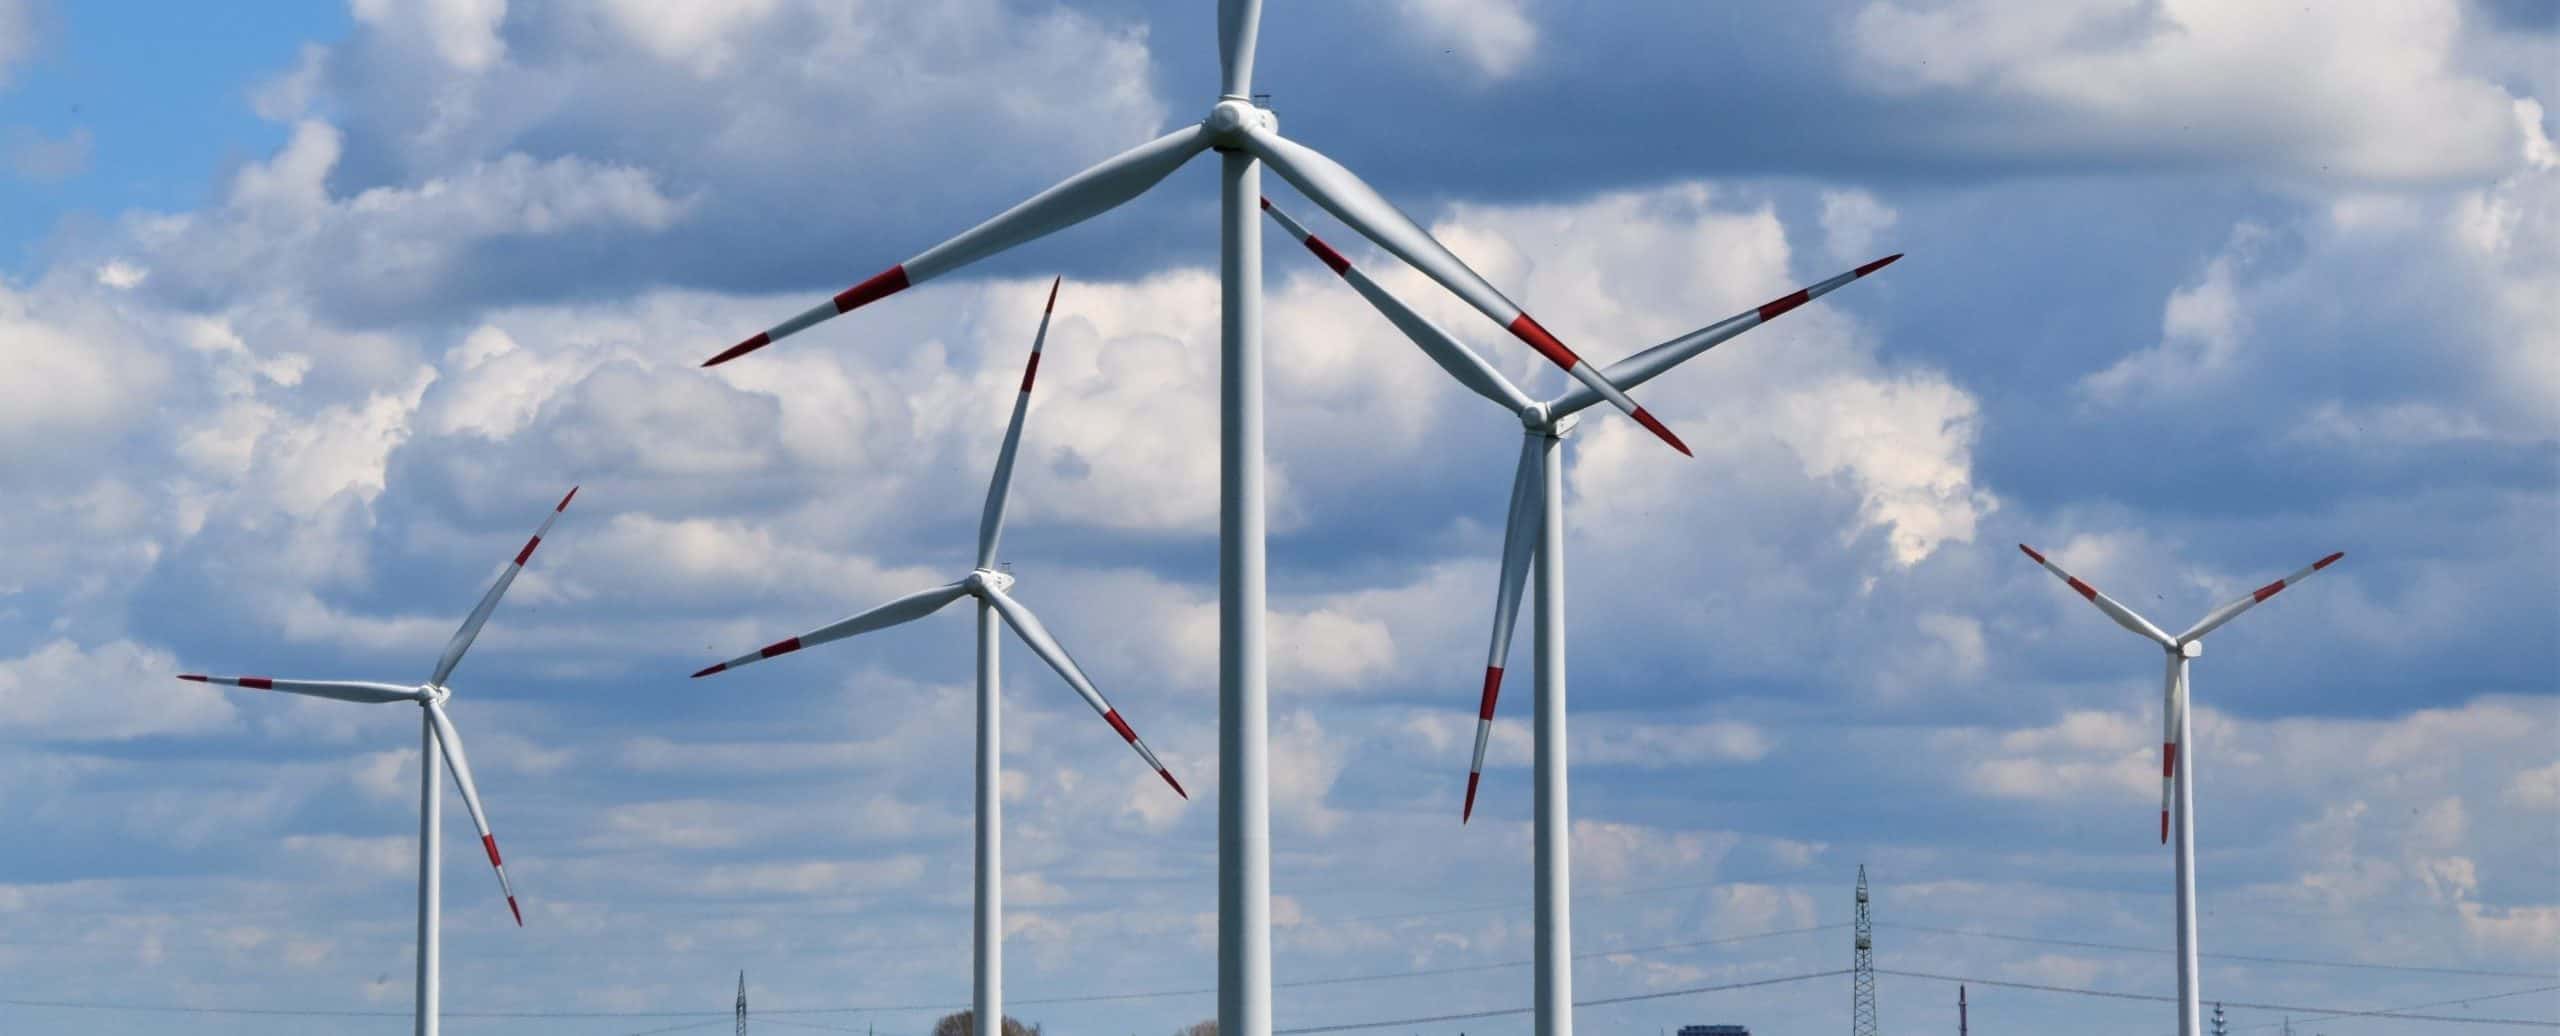 Introducing the Edinburgh-based wind investor Ventient Energy